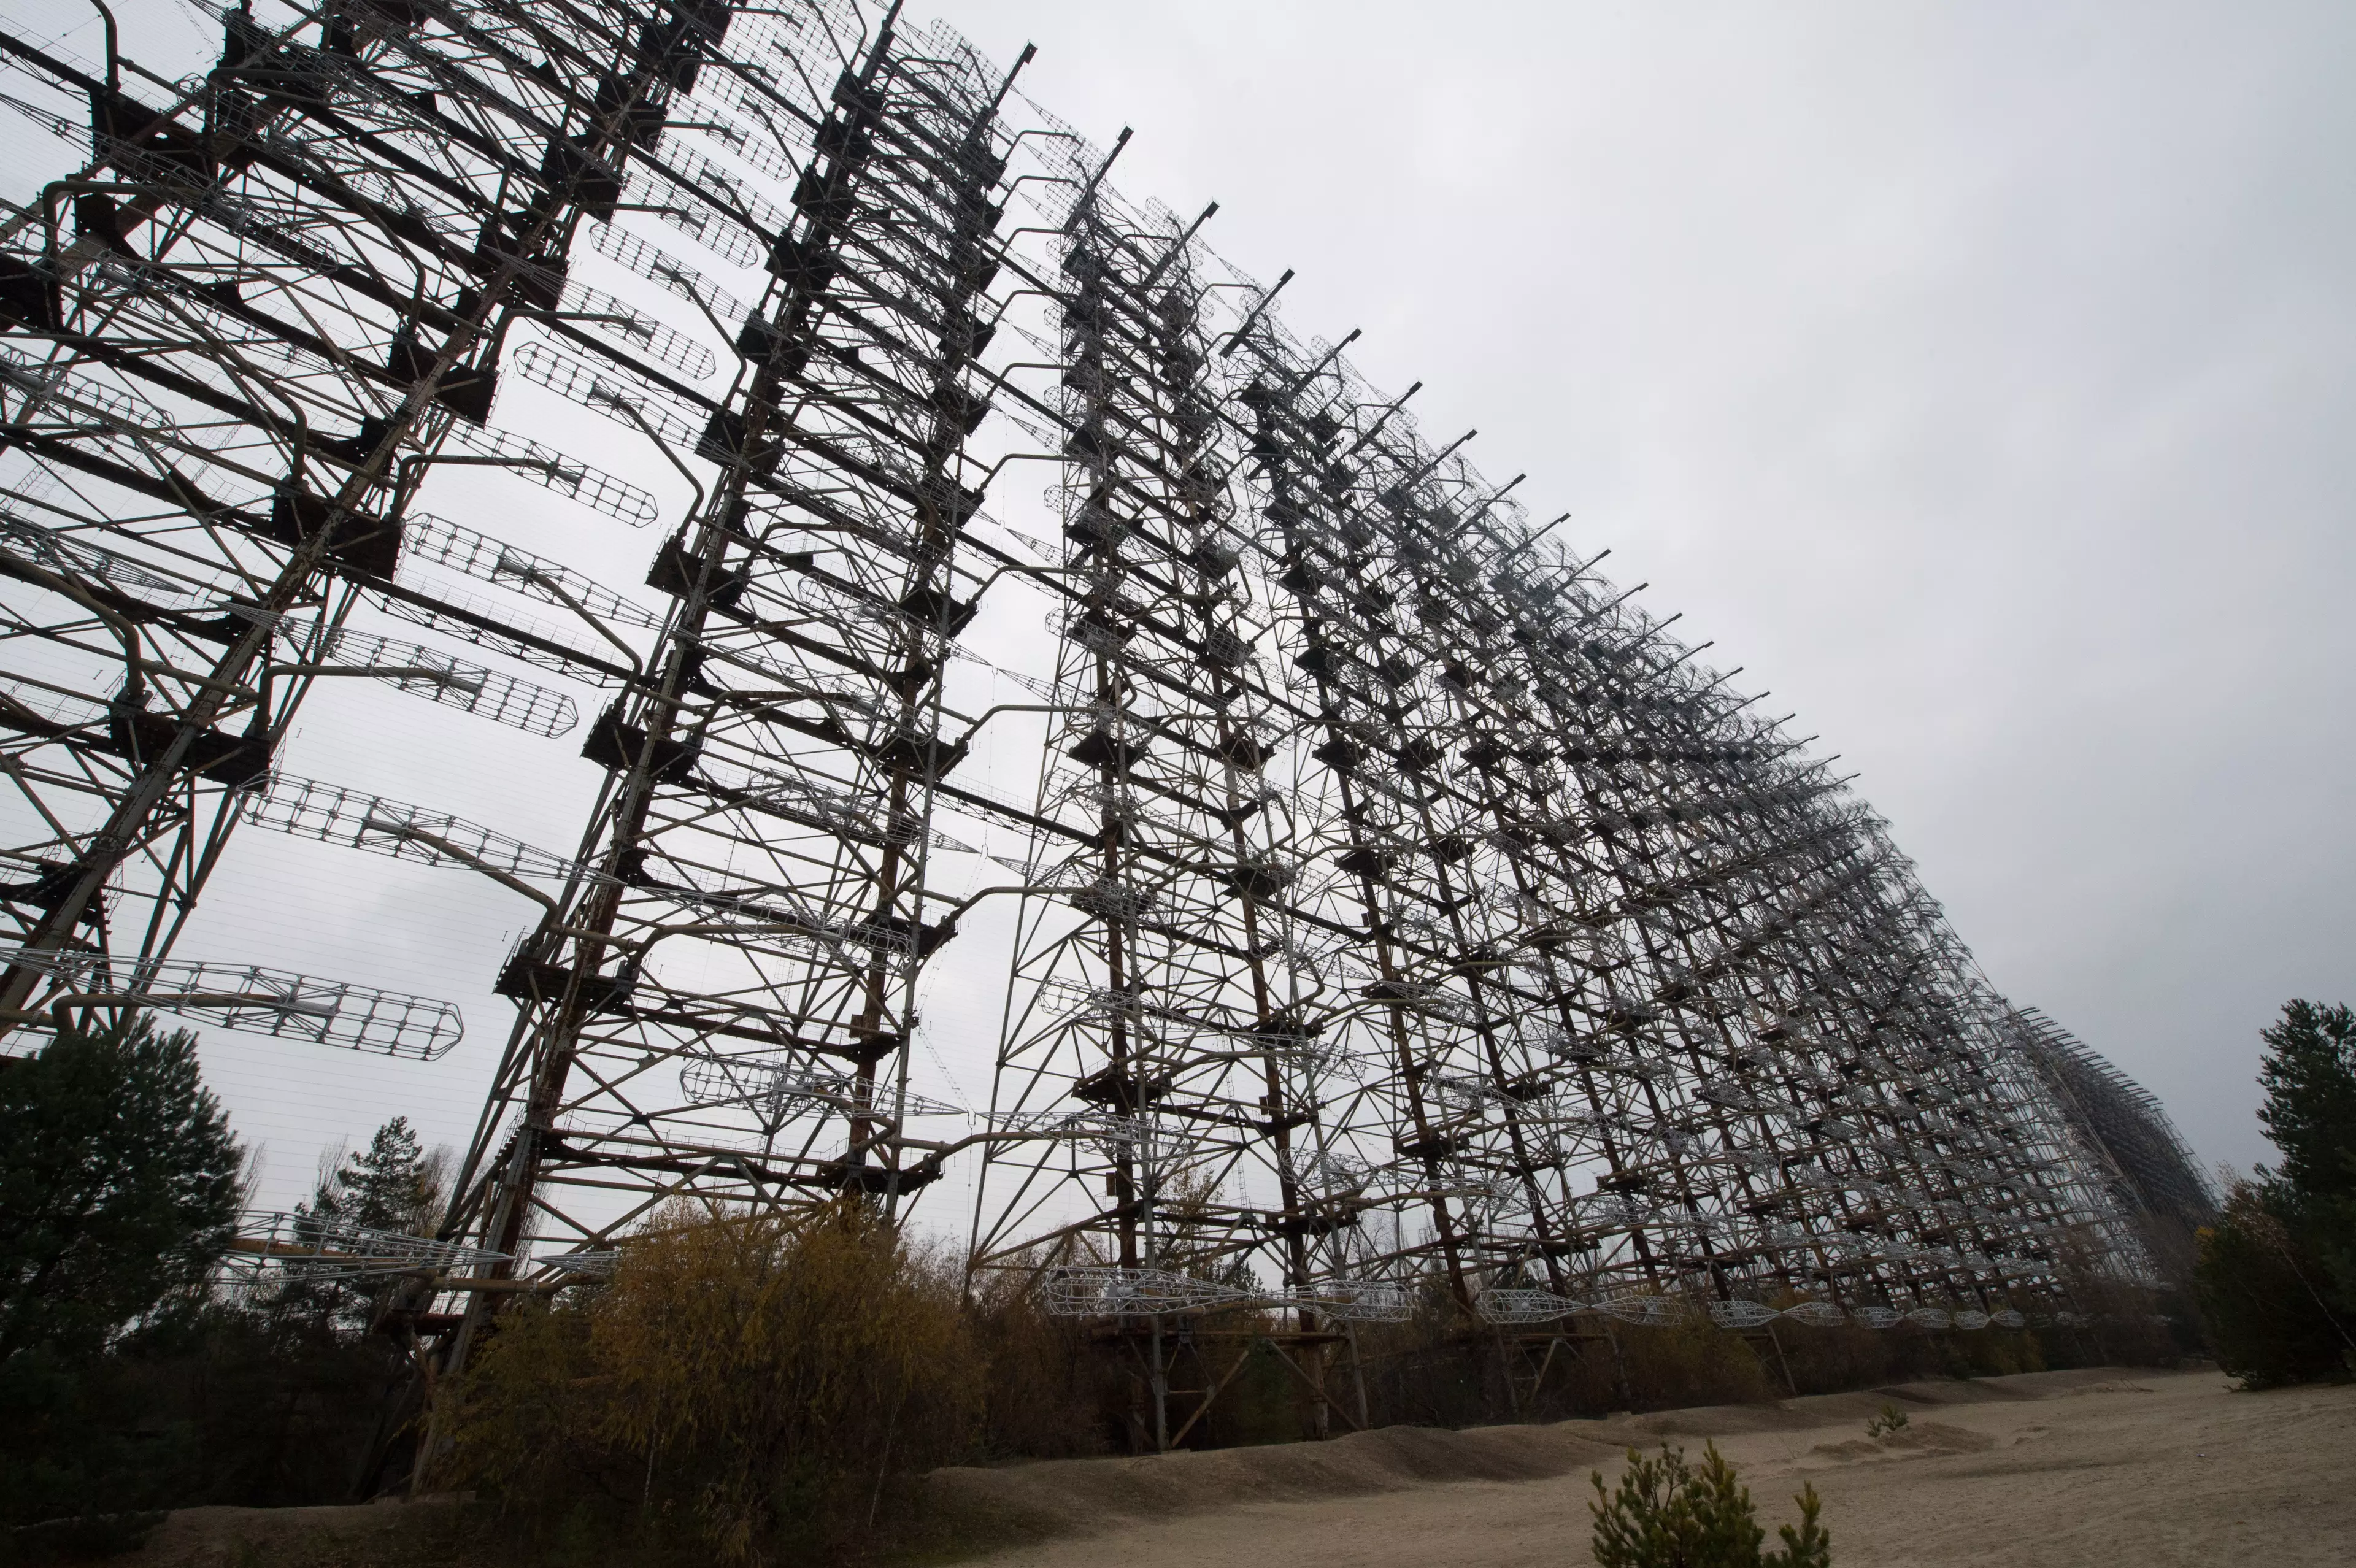 The Duga radar station.